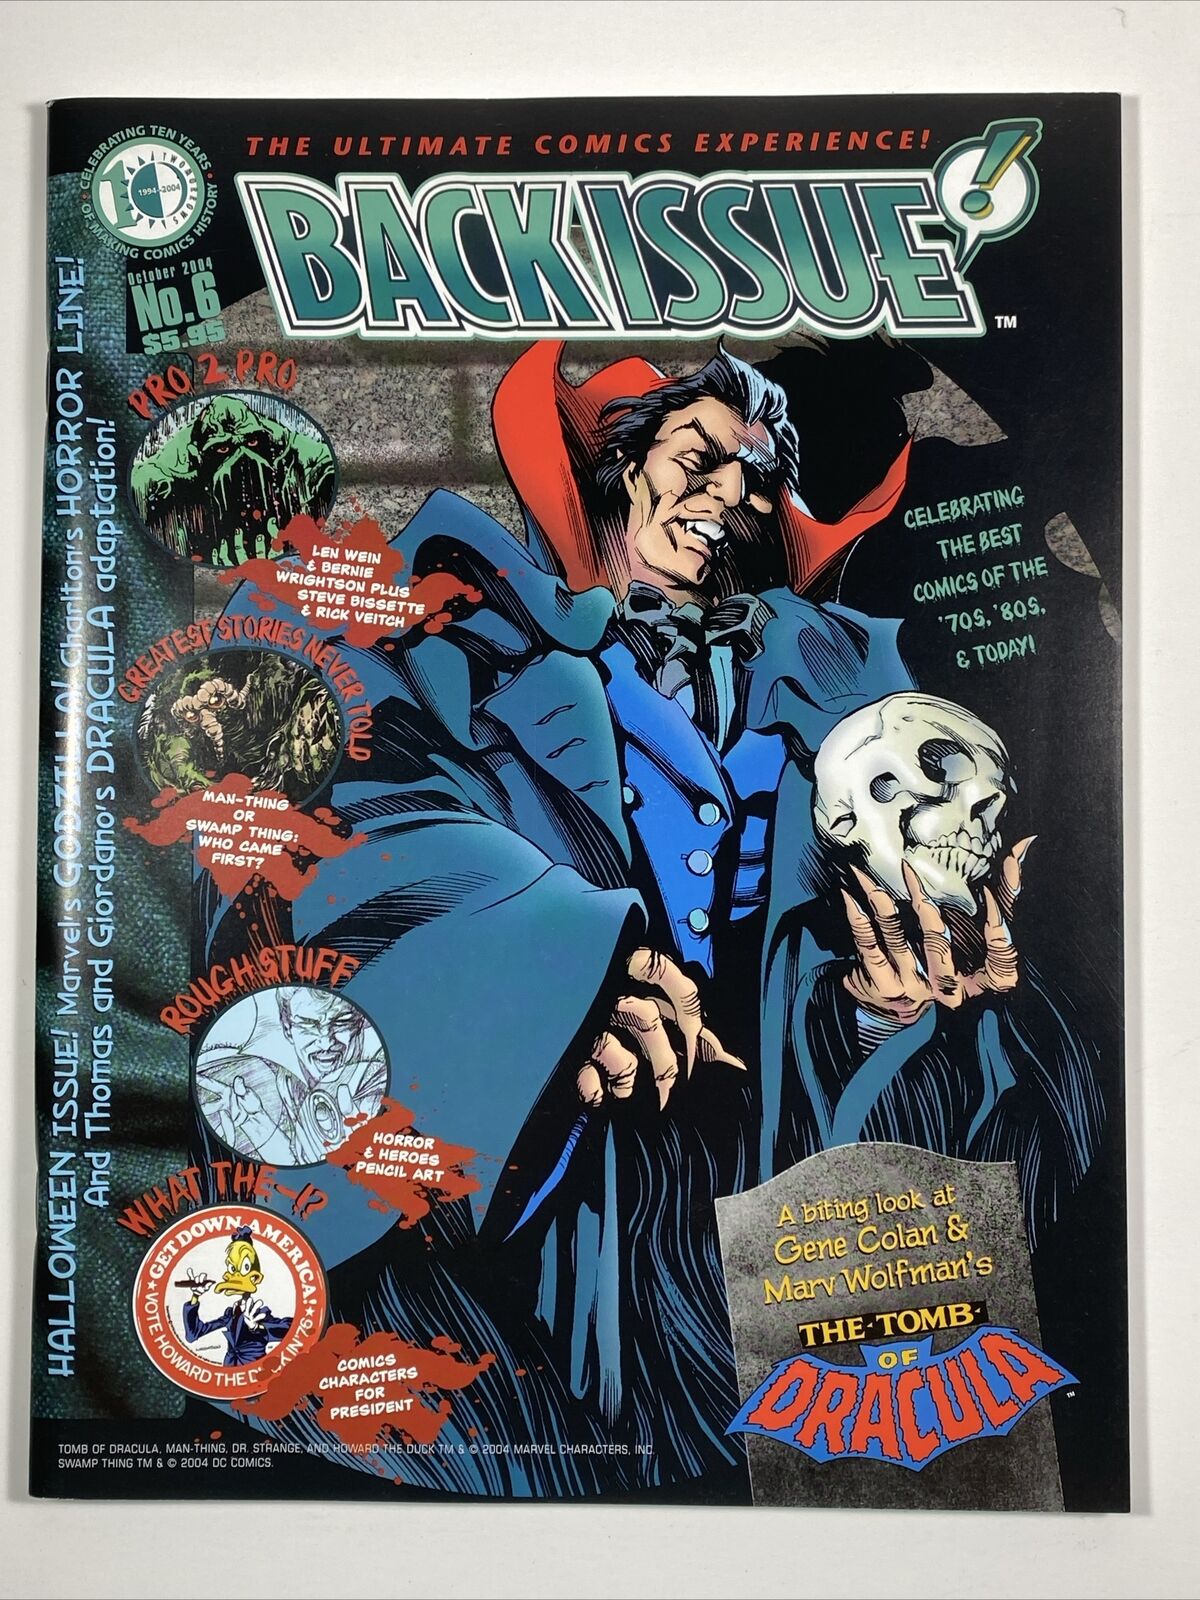 BACK ISSUE magazine #6 comic book fanzine 2004 Excellent Cond Dracula